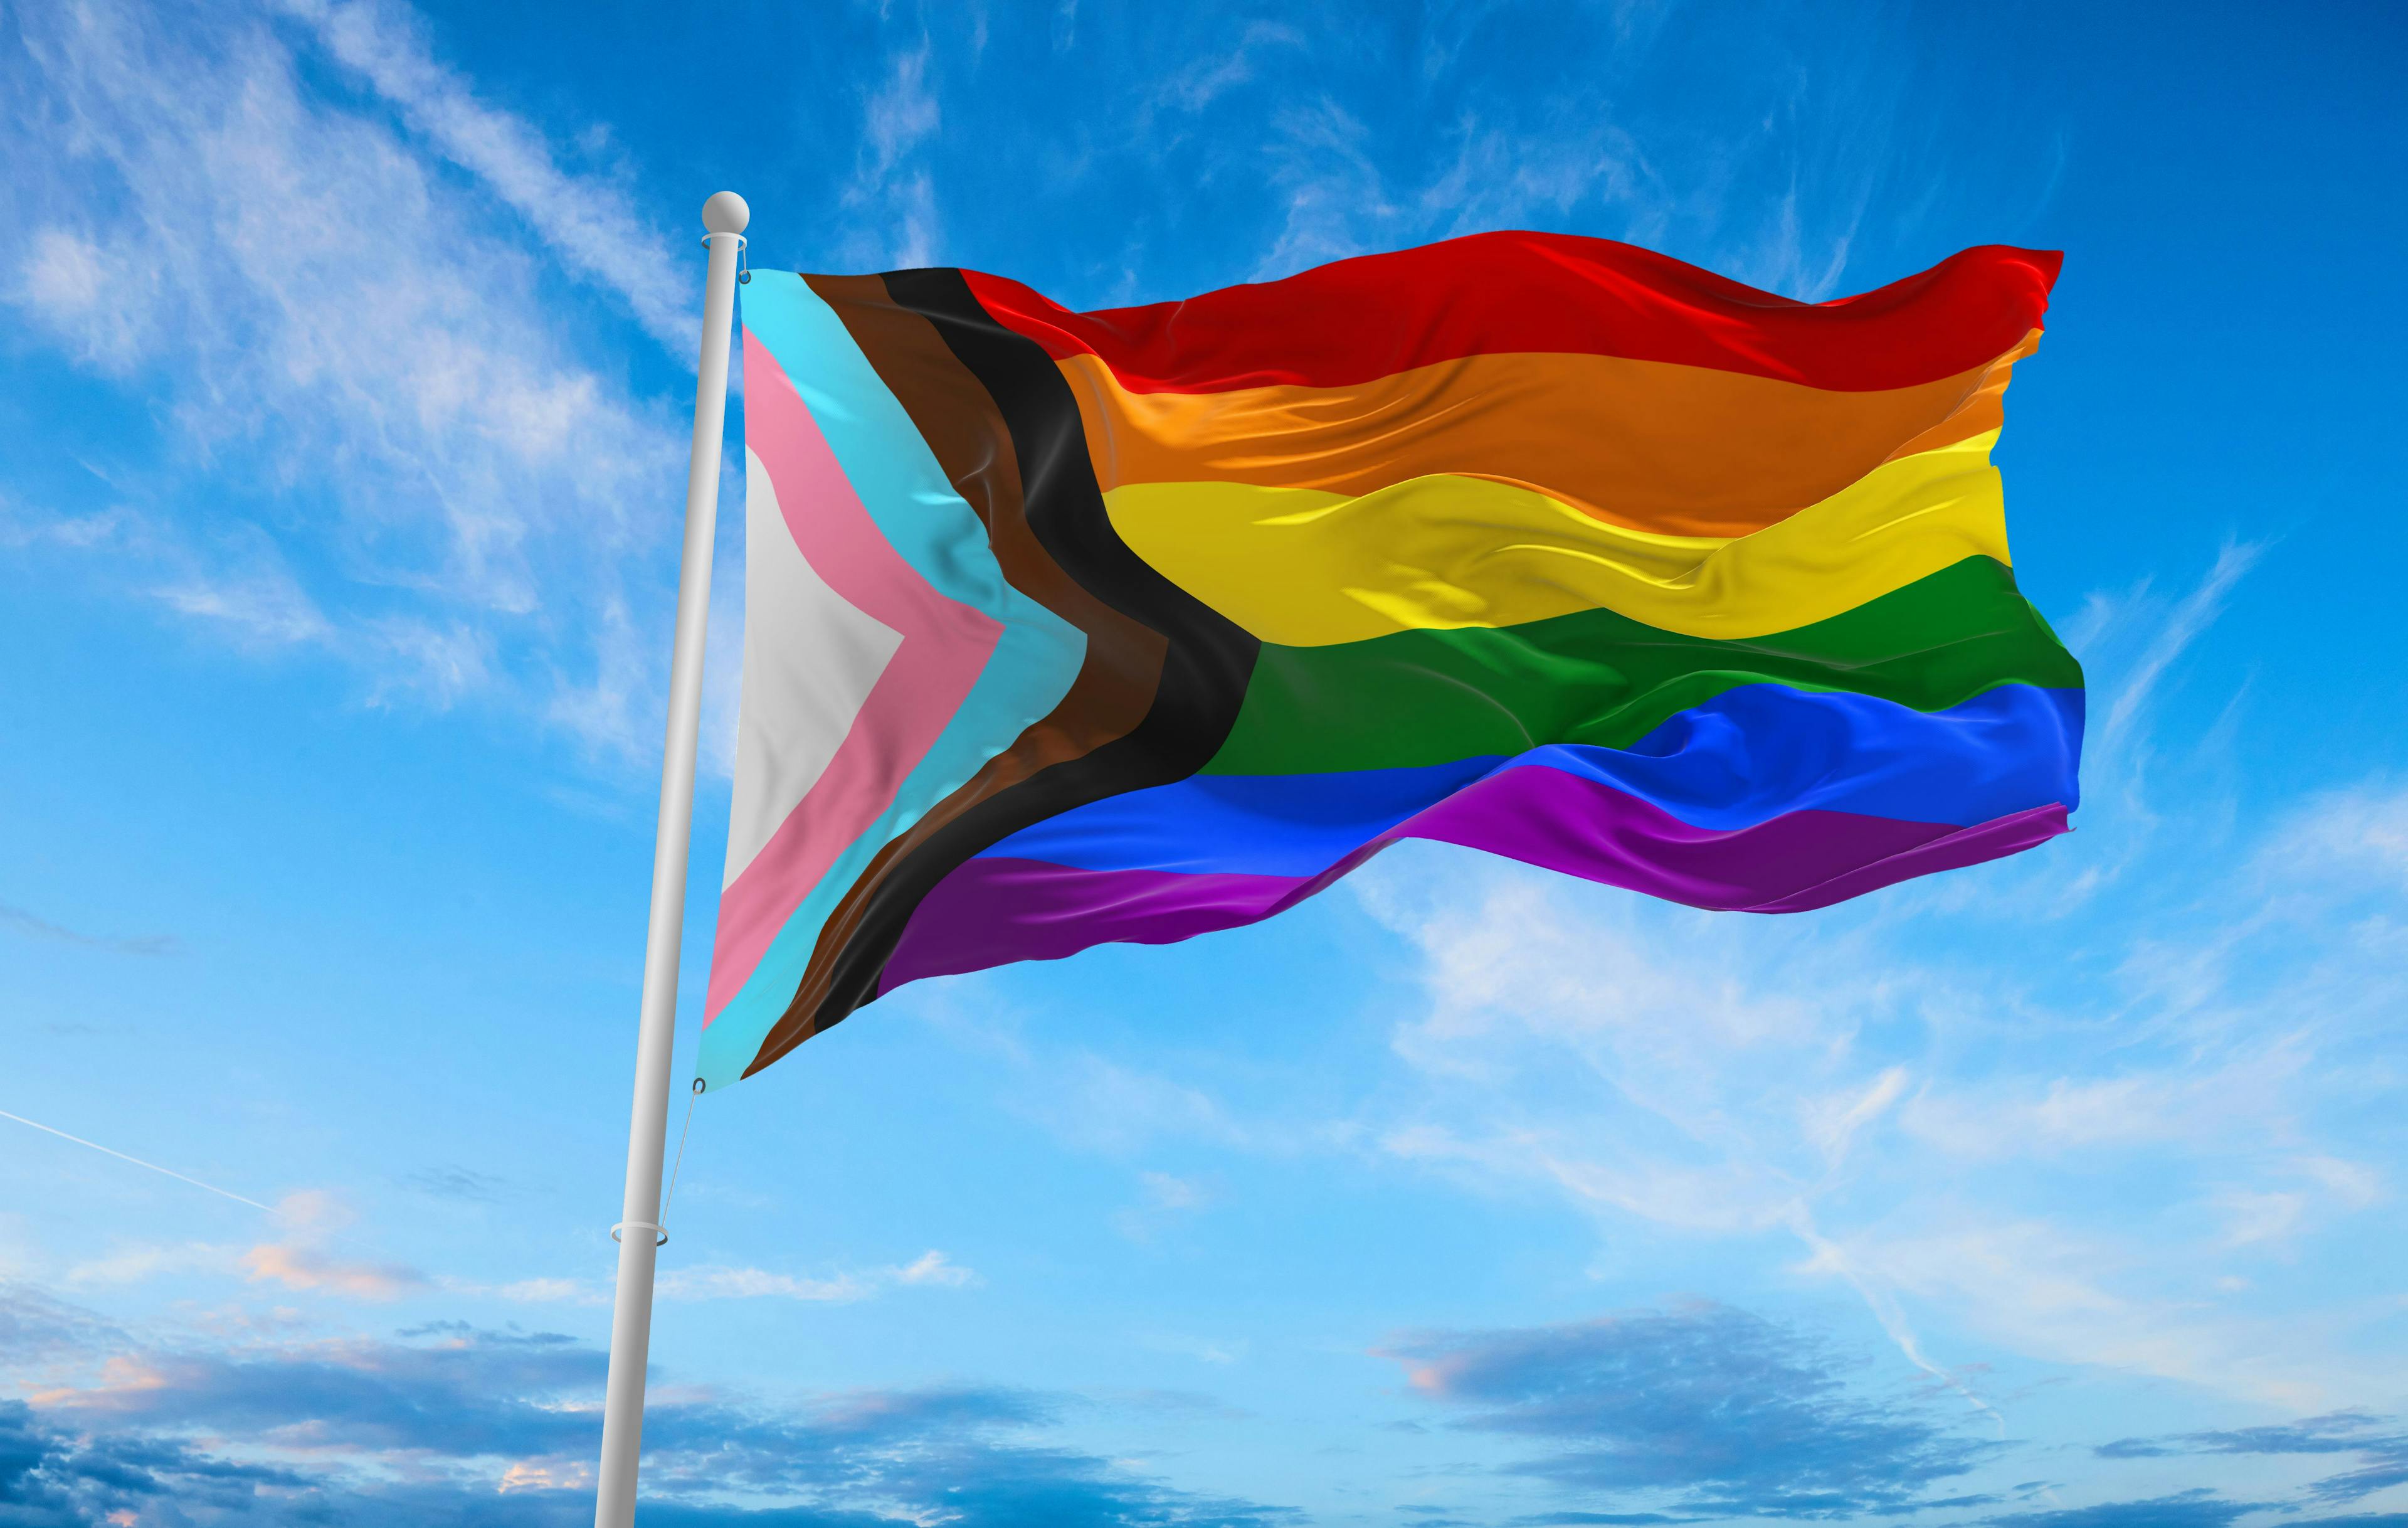 PrideVMC celebrates Pride 2022 and recognizes Gender Identity Bill of Rights signatories